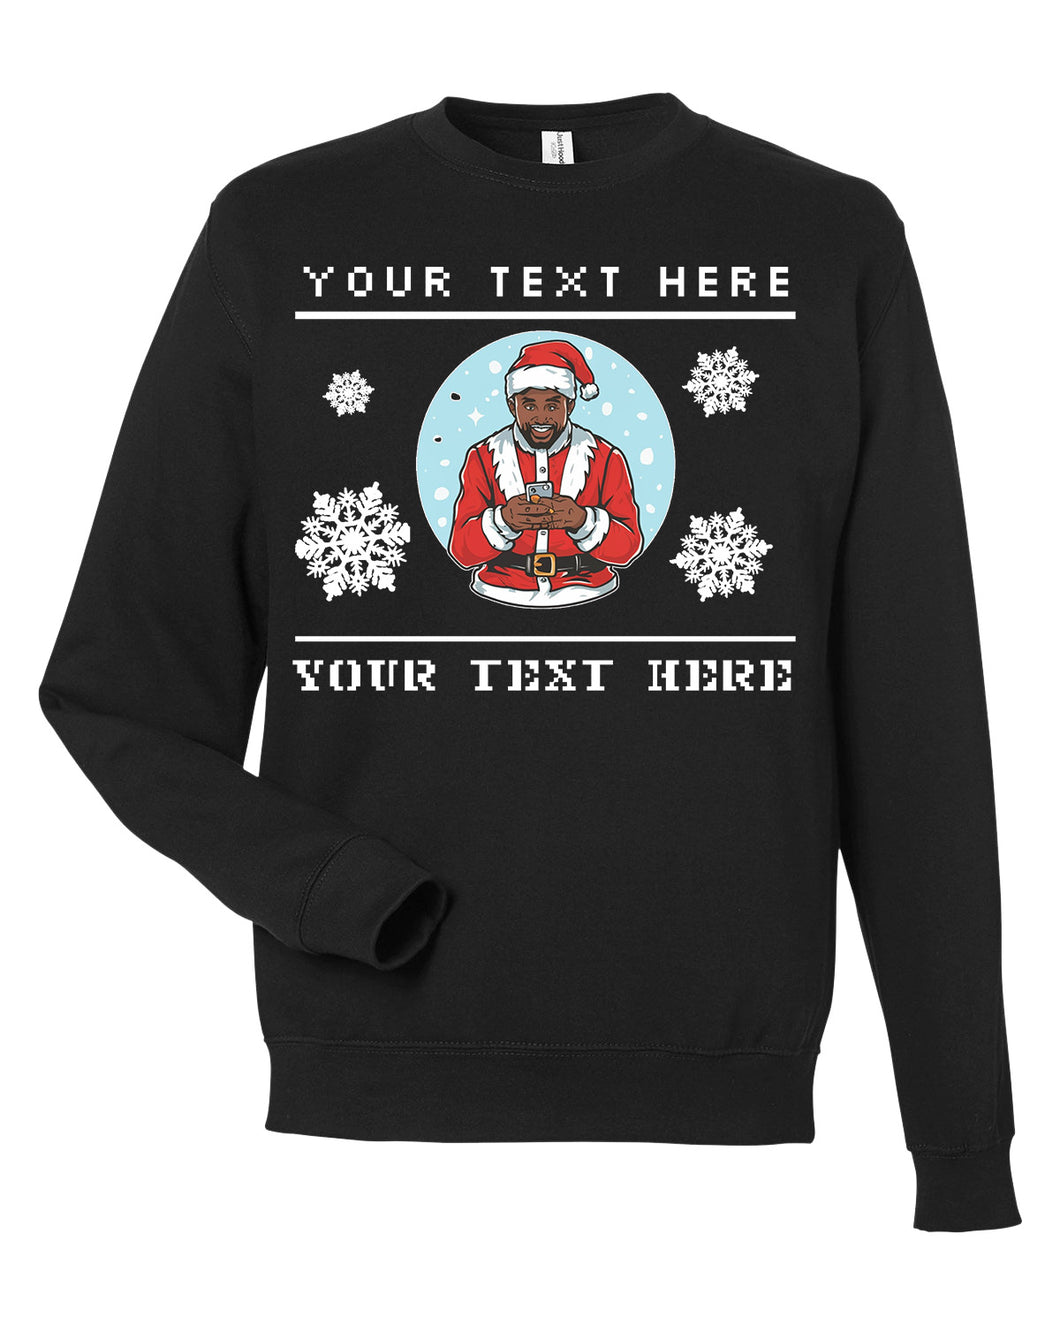 Scrollin' Black Santa Christmas Ugly Sweater